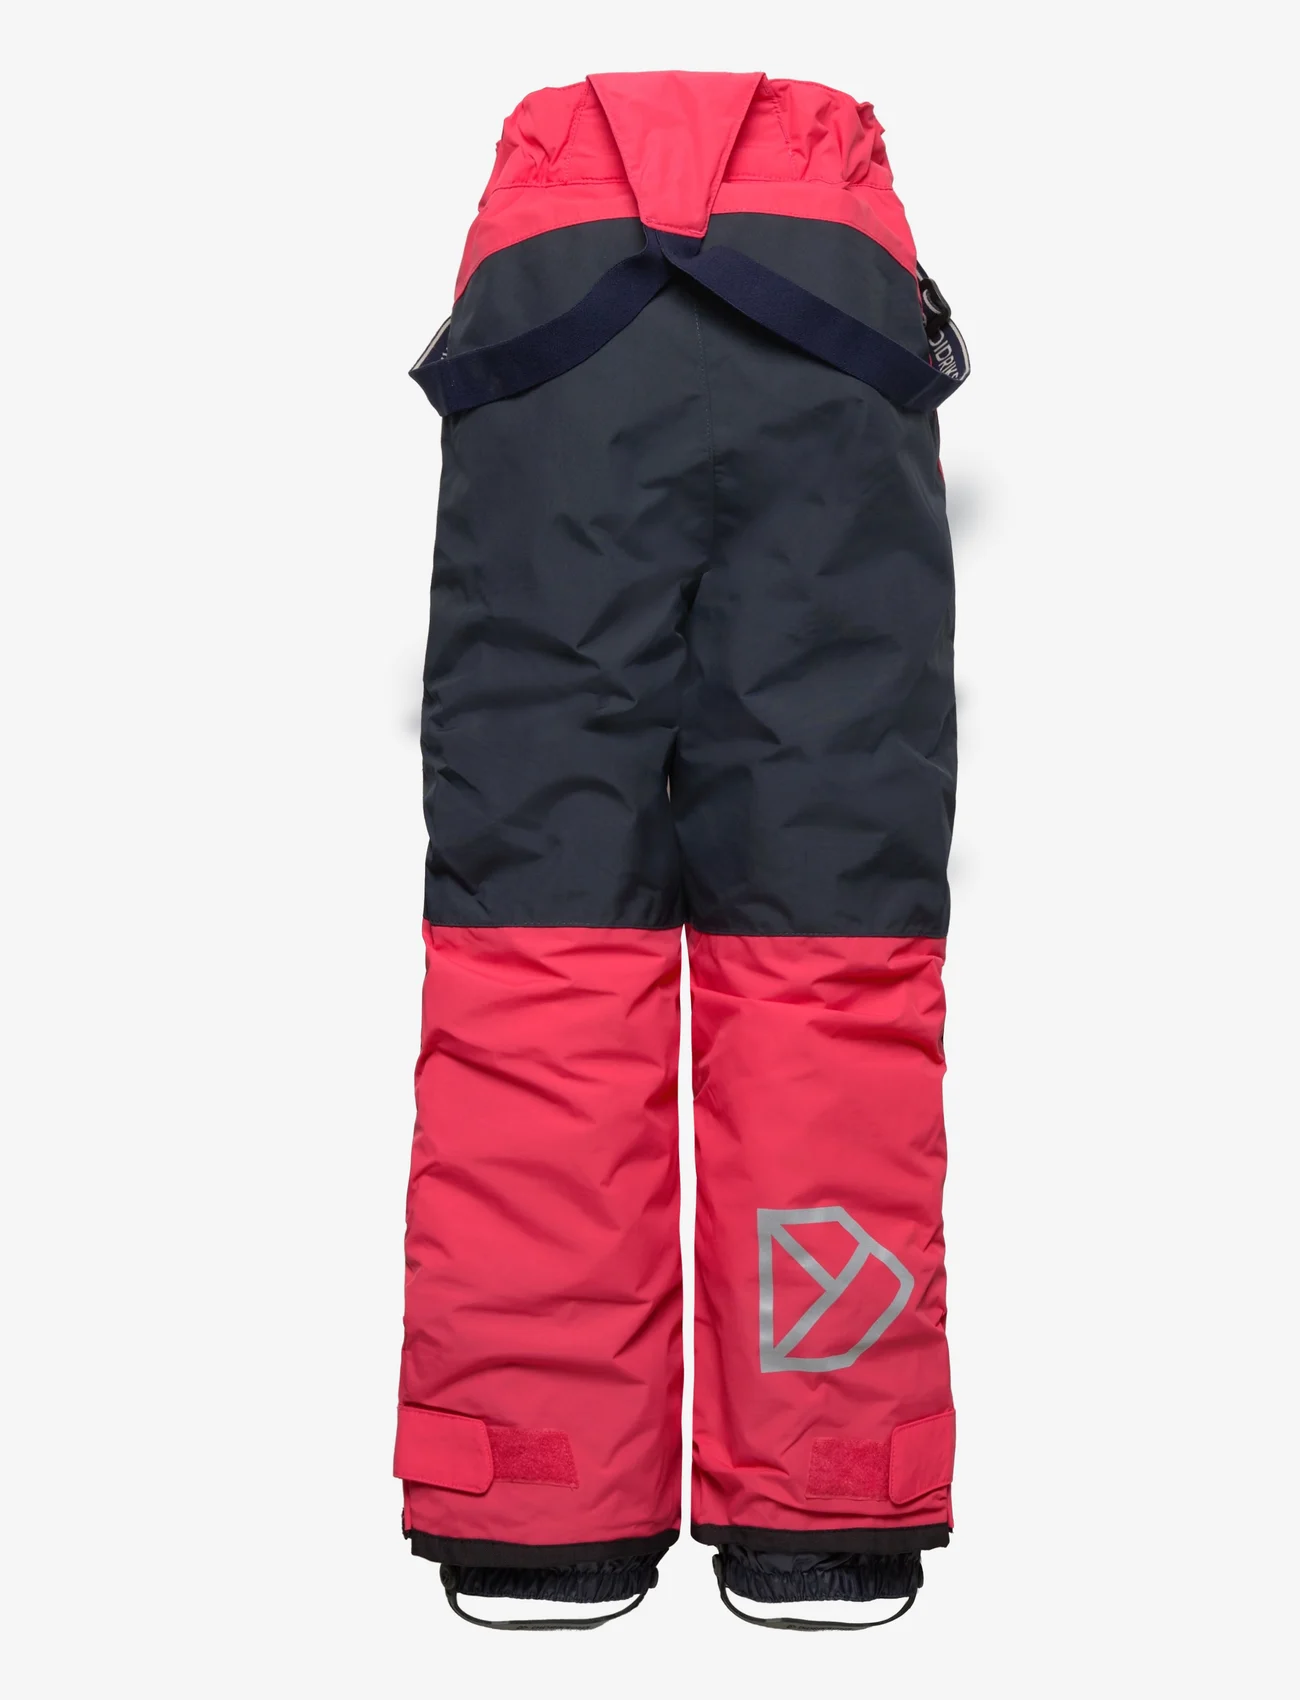 Didriksons - IDRE KIDS PANTS 6 - slidinėjimo kelnės - modern pink - 1